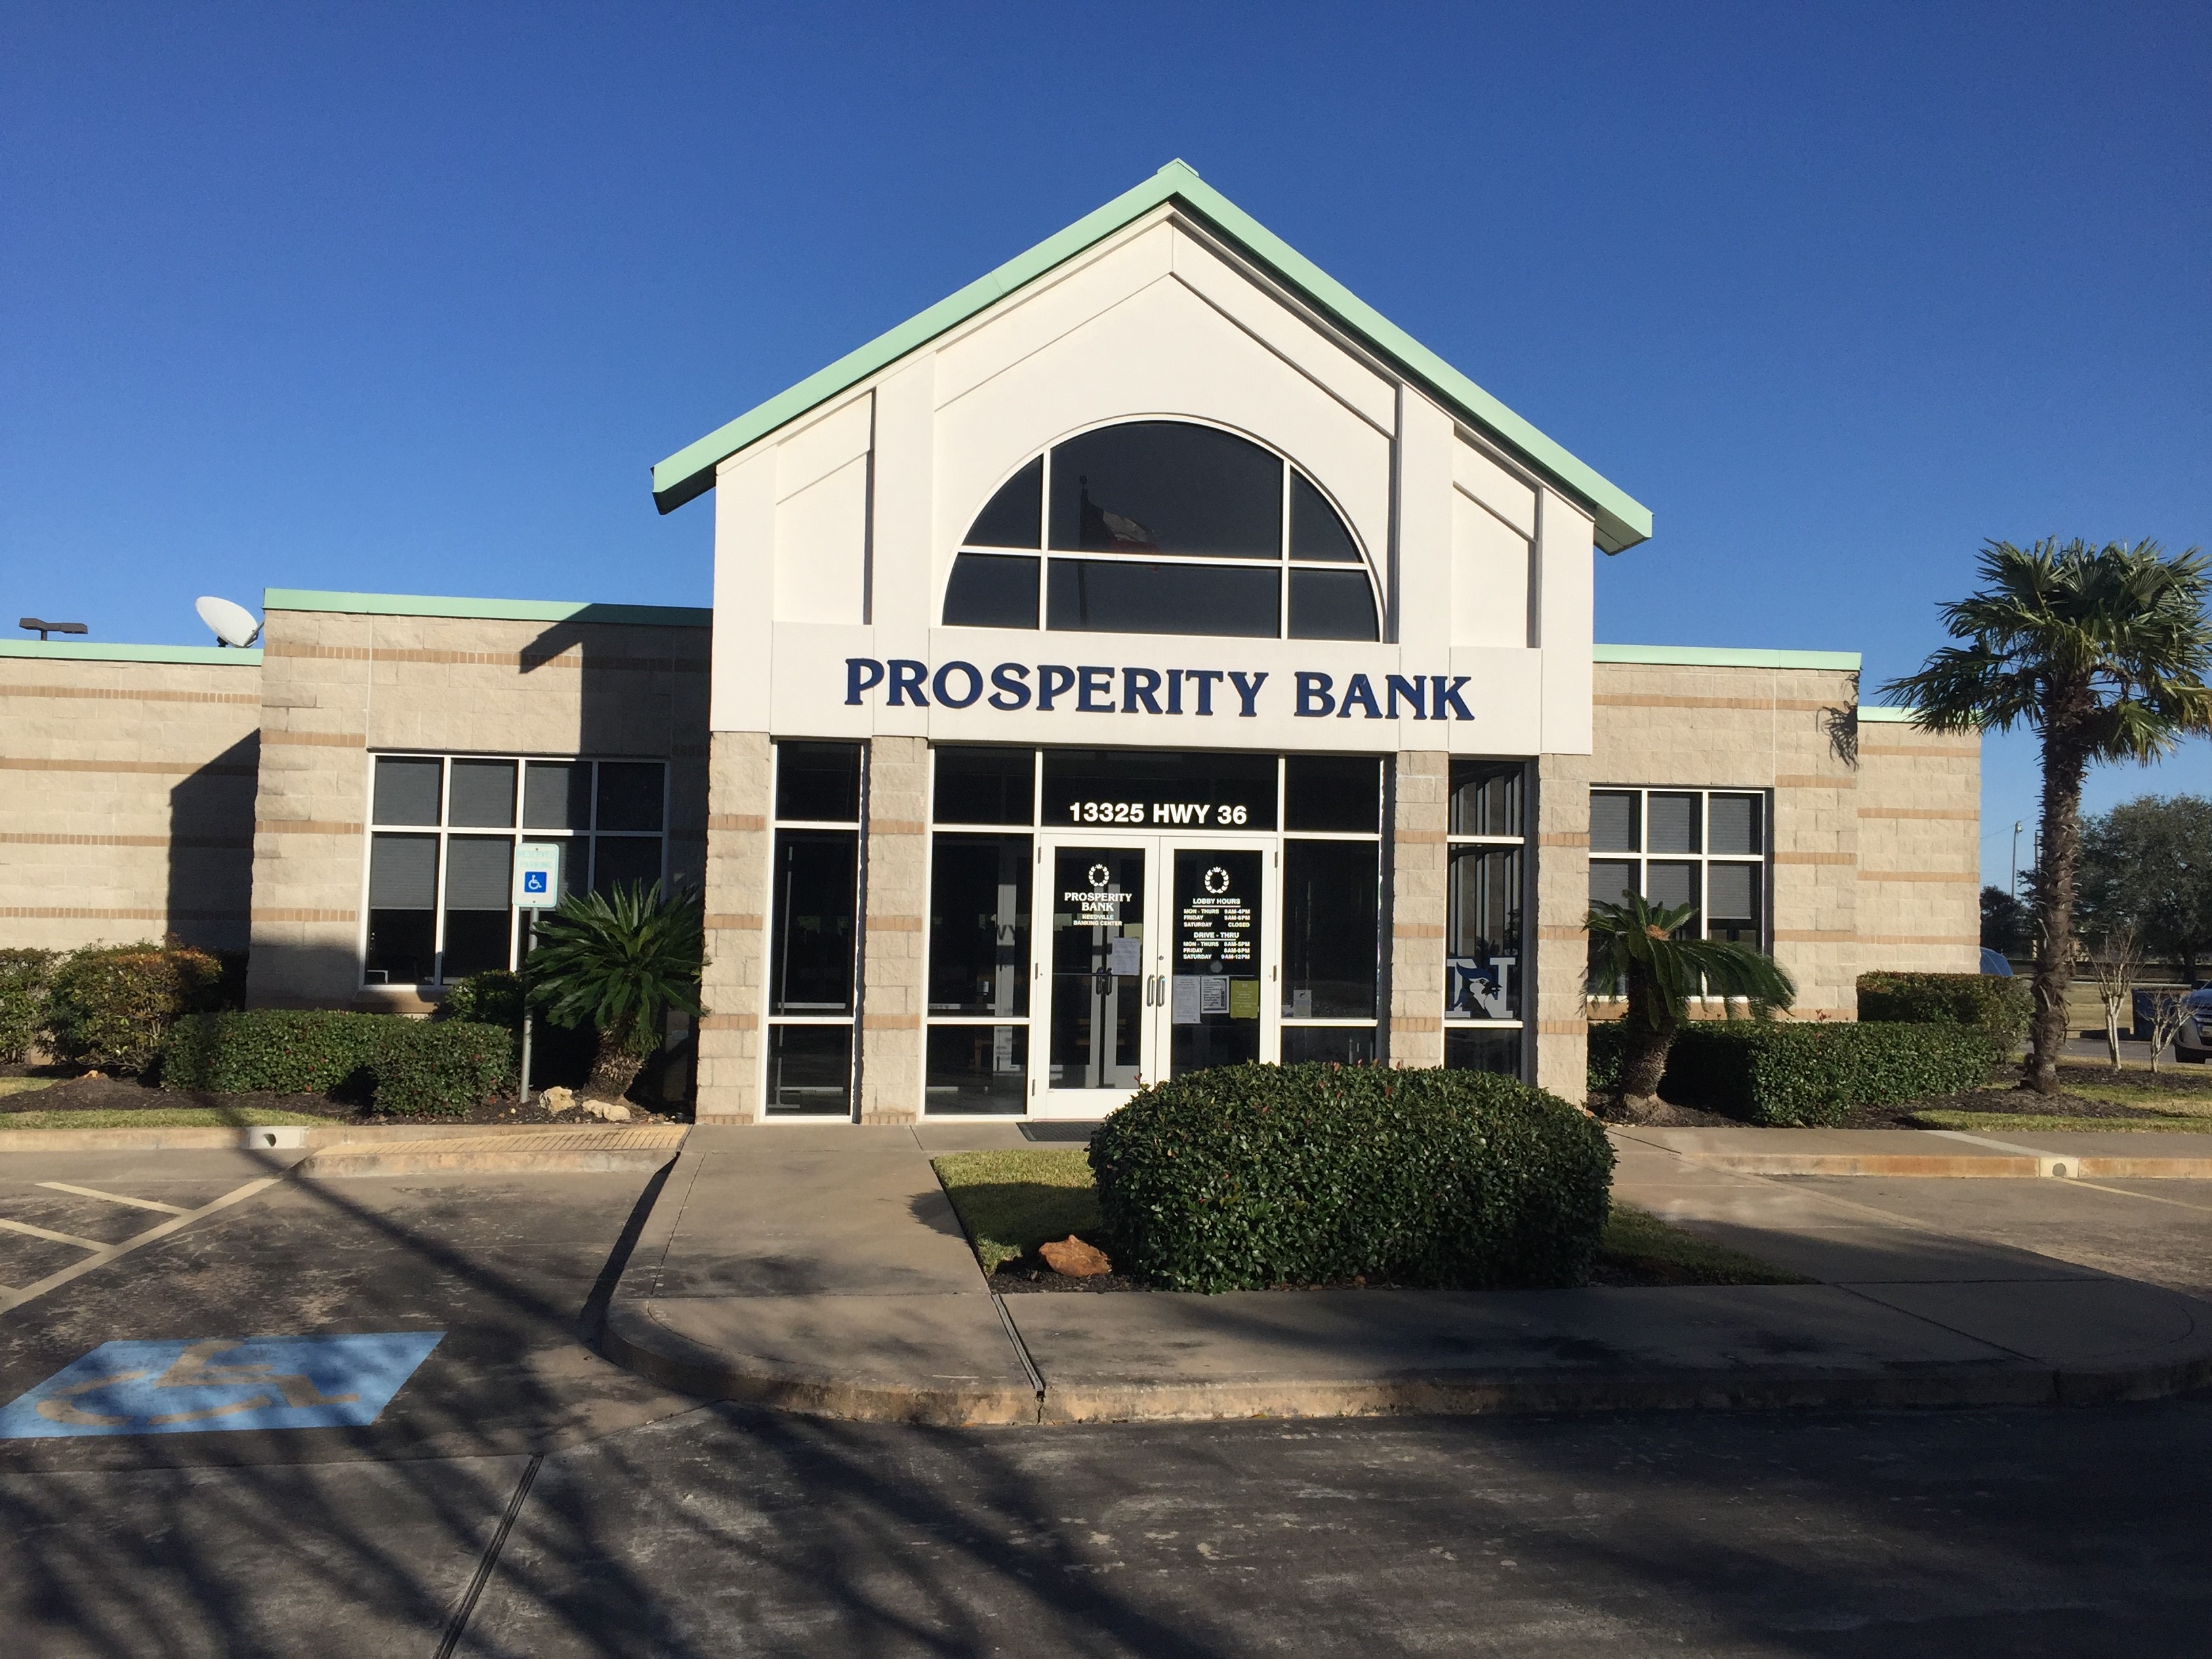 Prosperity Bank Needville (979)793-4211